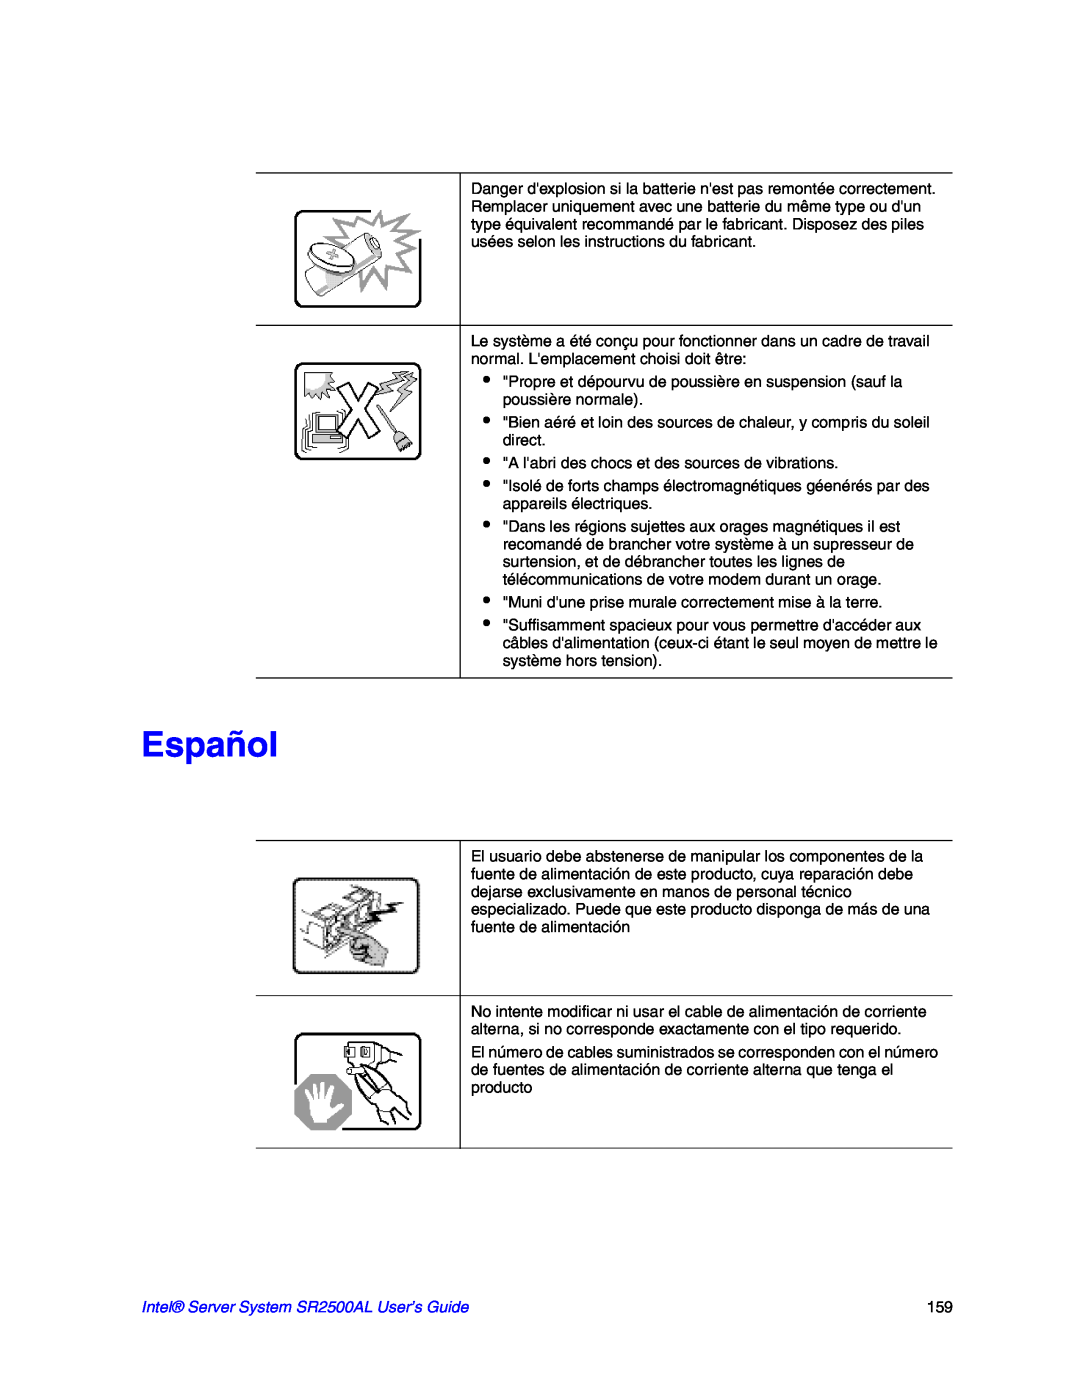 Intel manual Español, Intel Server System SR2500AL User’s Guide 